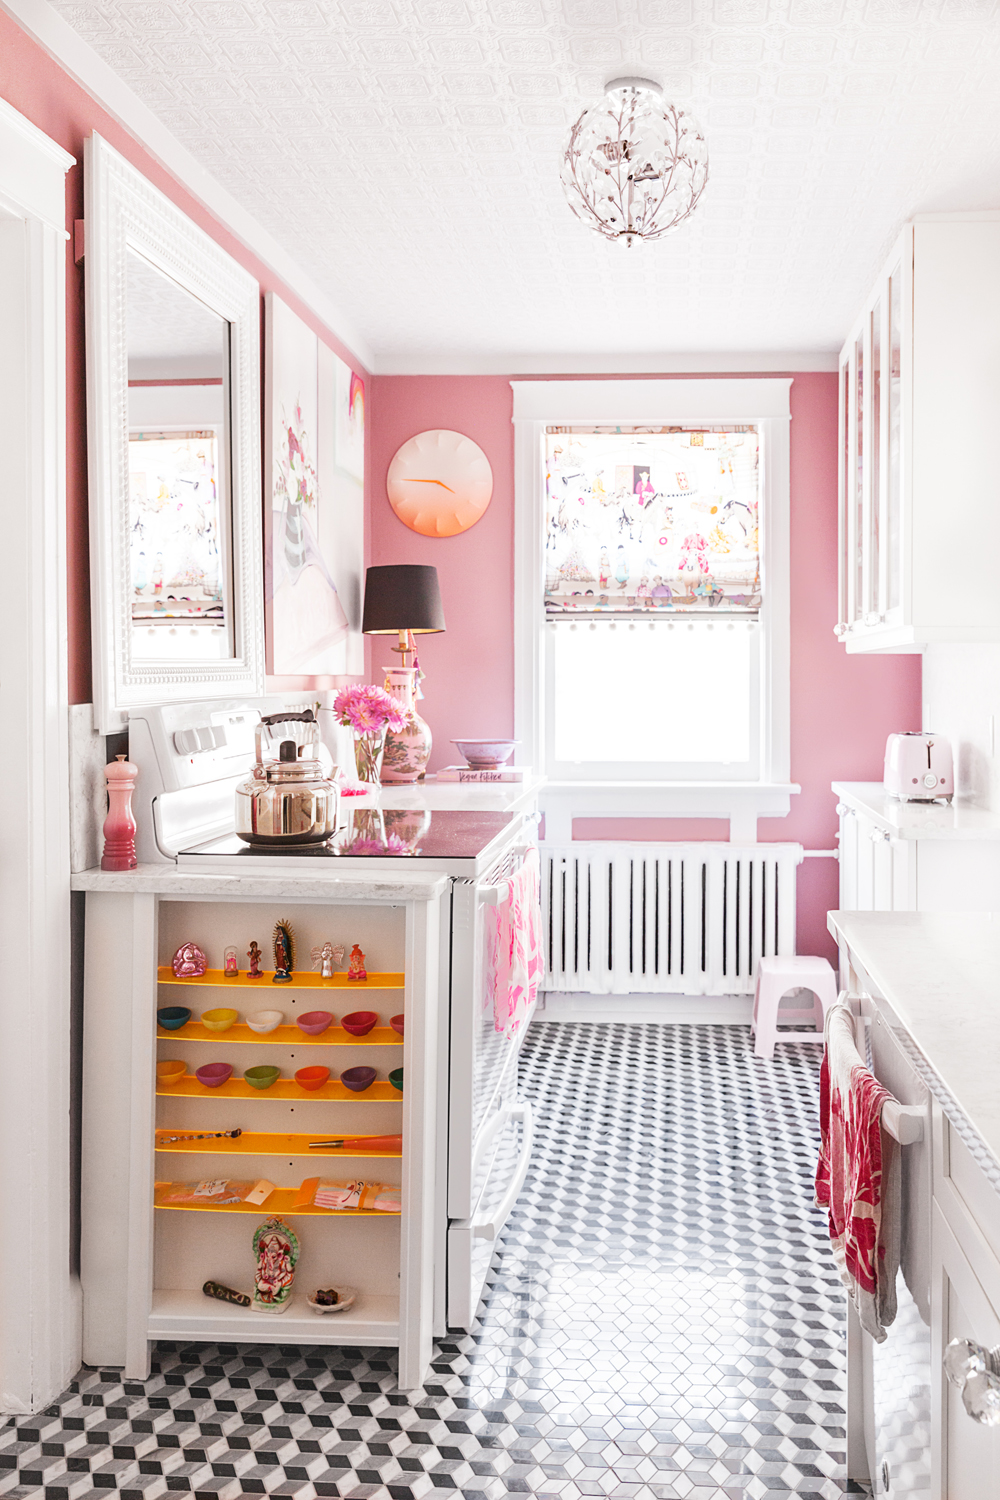 Tiffany Pratt's pink kitchen with geometric floor tiles